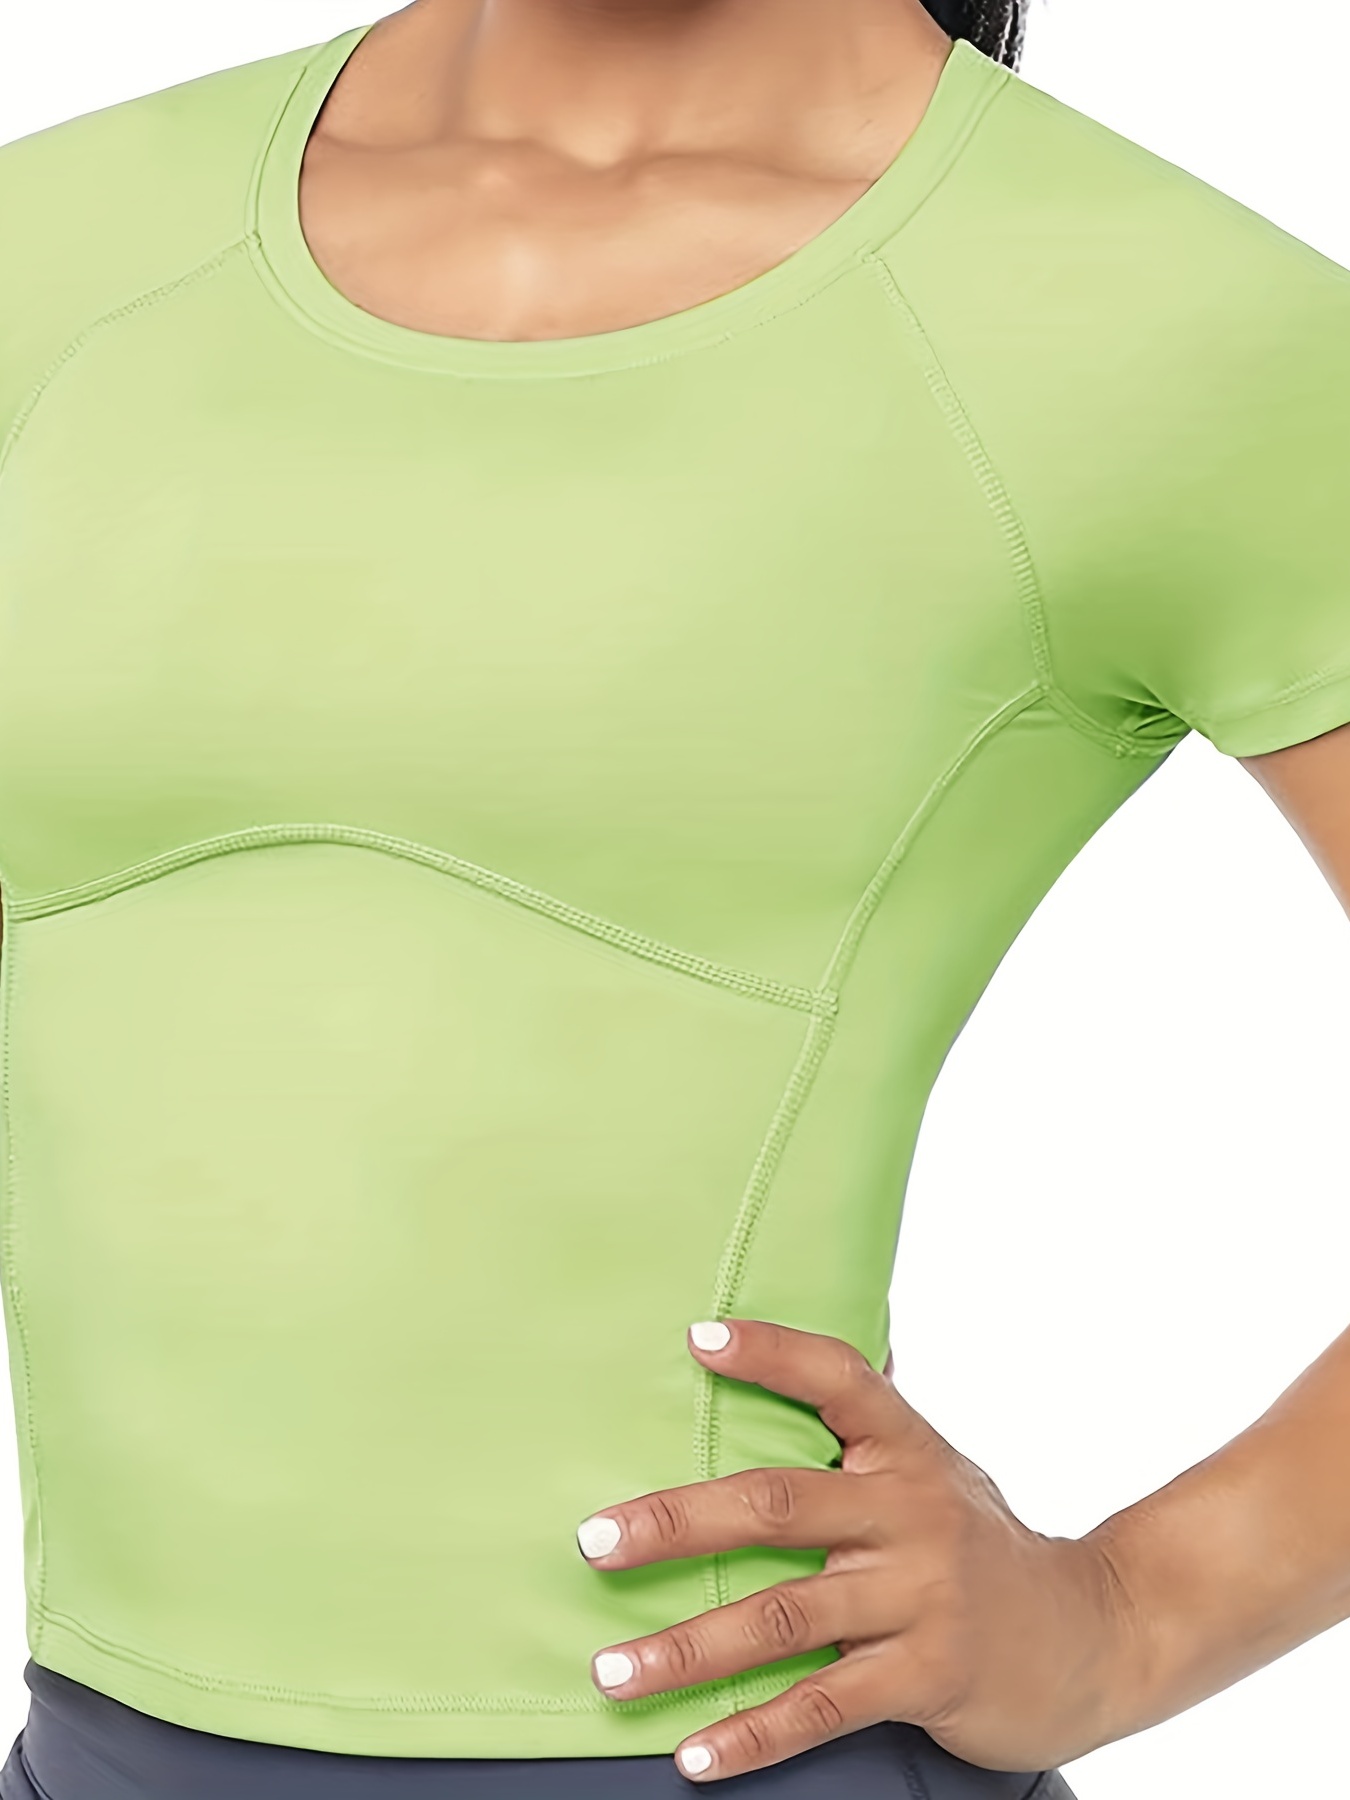 KELME Women's Running T-shirts Gym Exercise Shirt Fitness Sportswear Yoga  Workout Summer Short Sleeve Breathable KWC161024